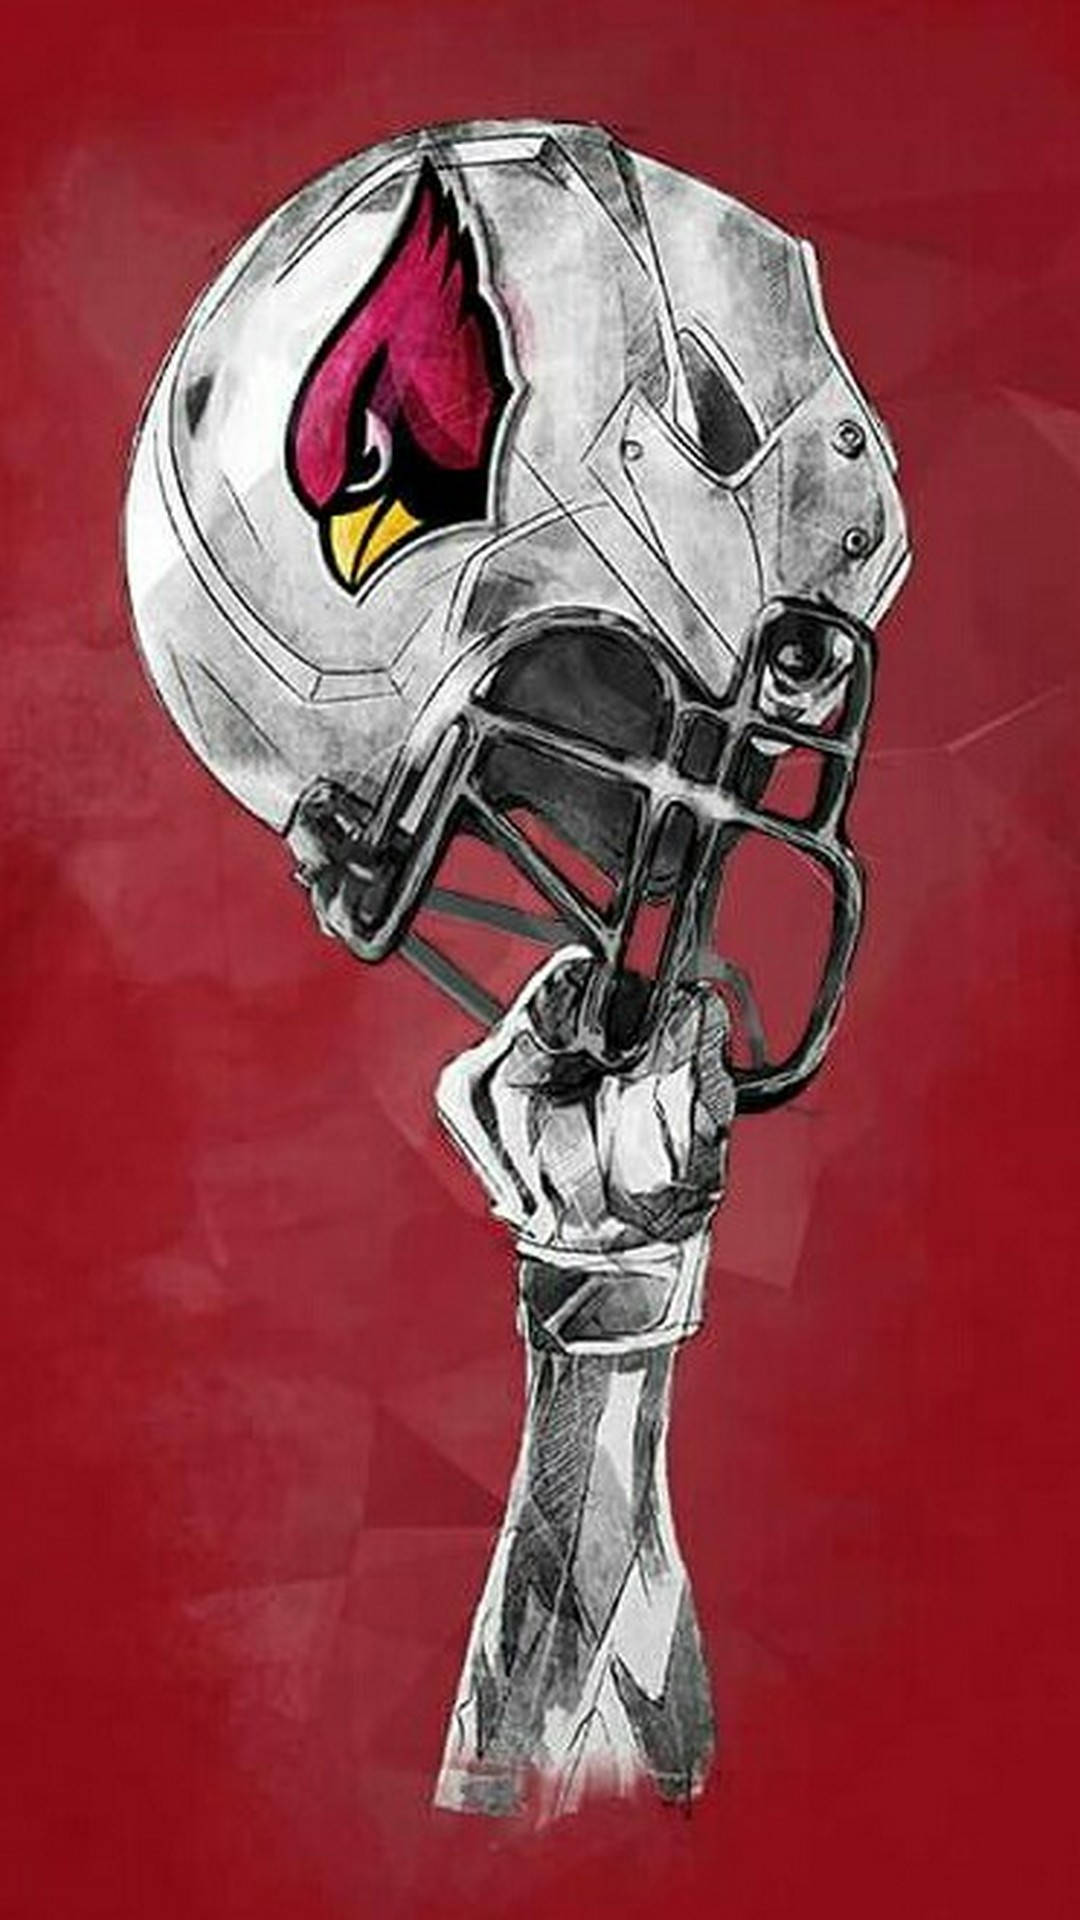 Arizona Cardinals Football Helmet Background